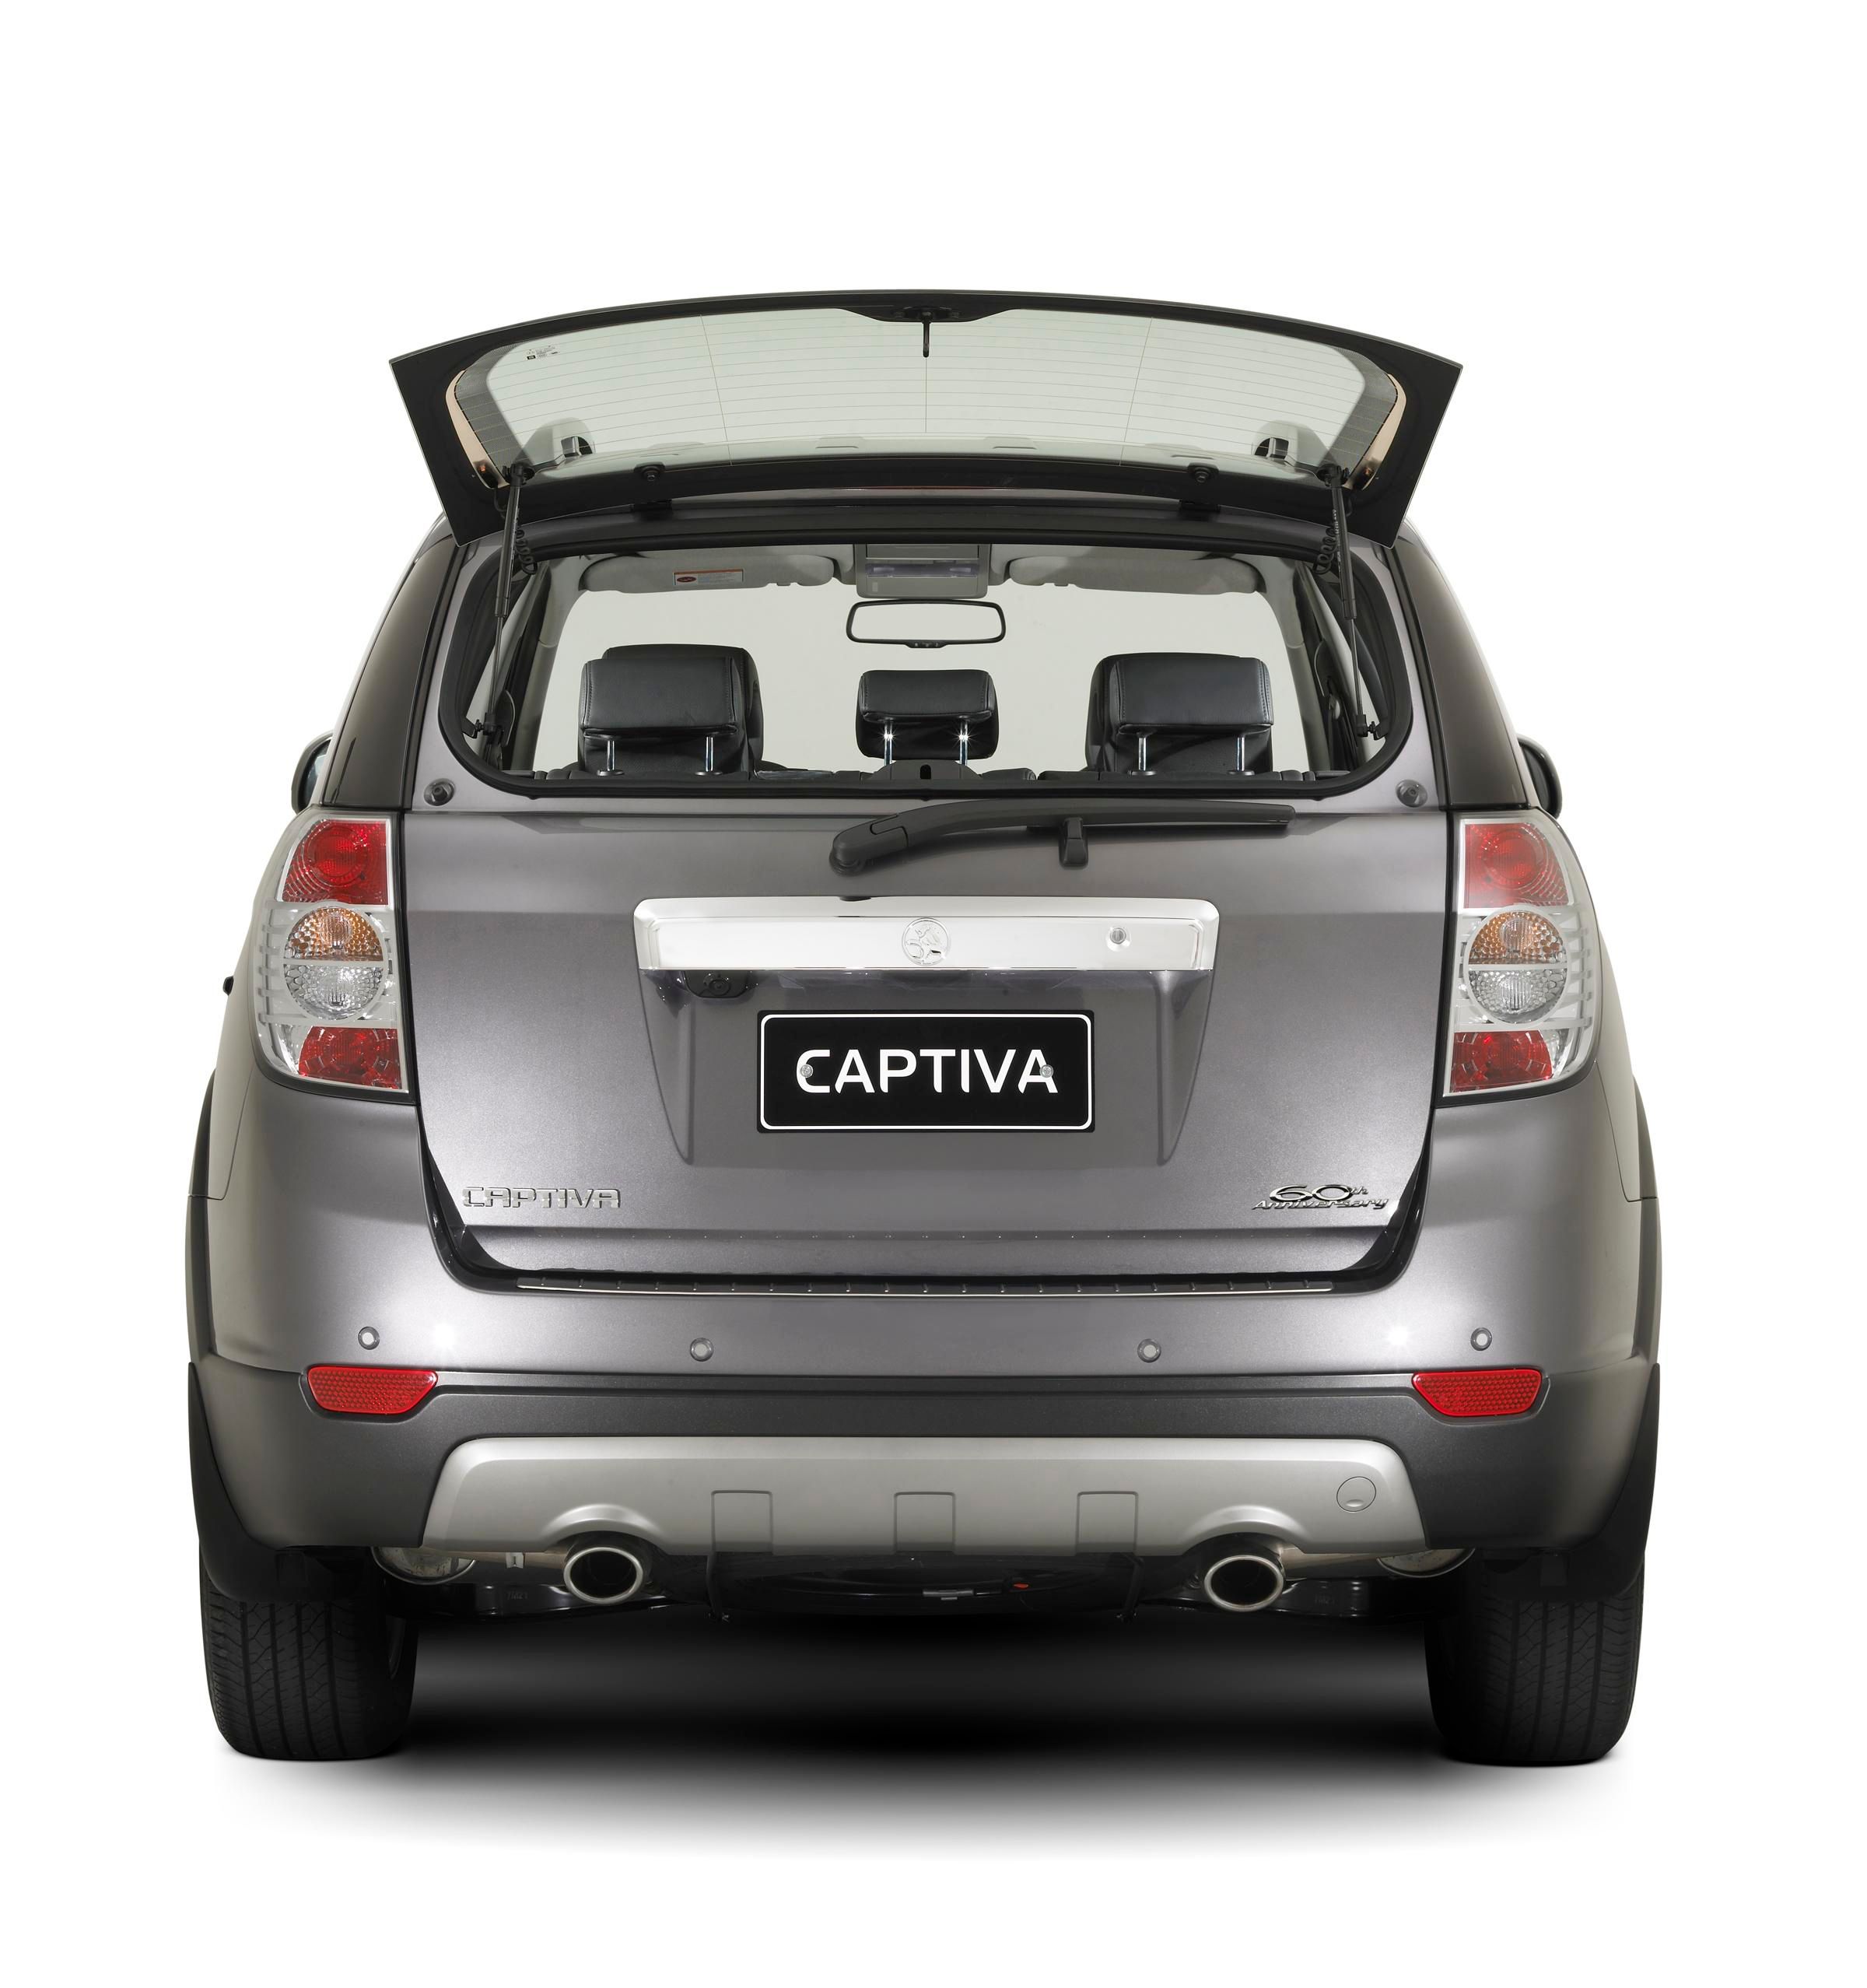 2008 Holden Captiva 60th Anniversary Special Edition